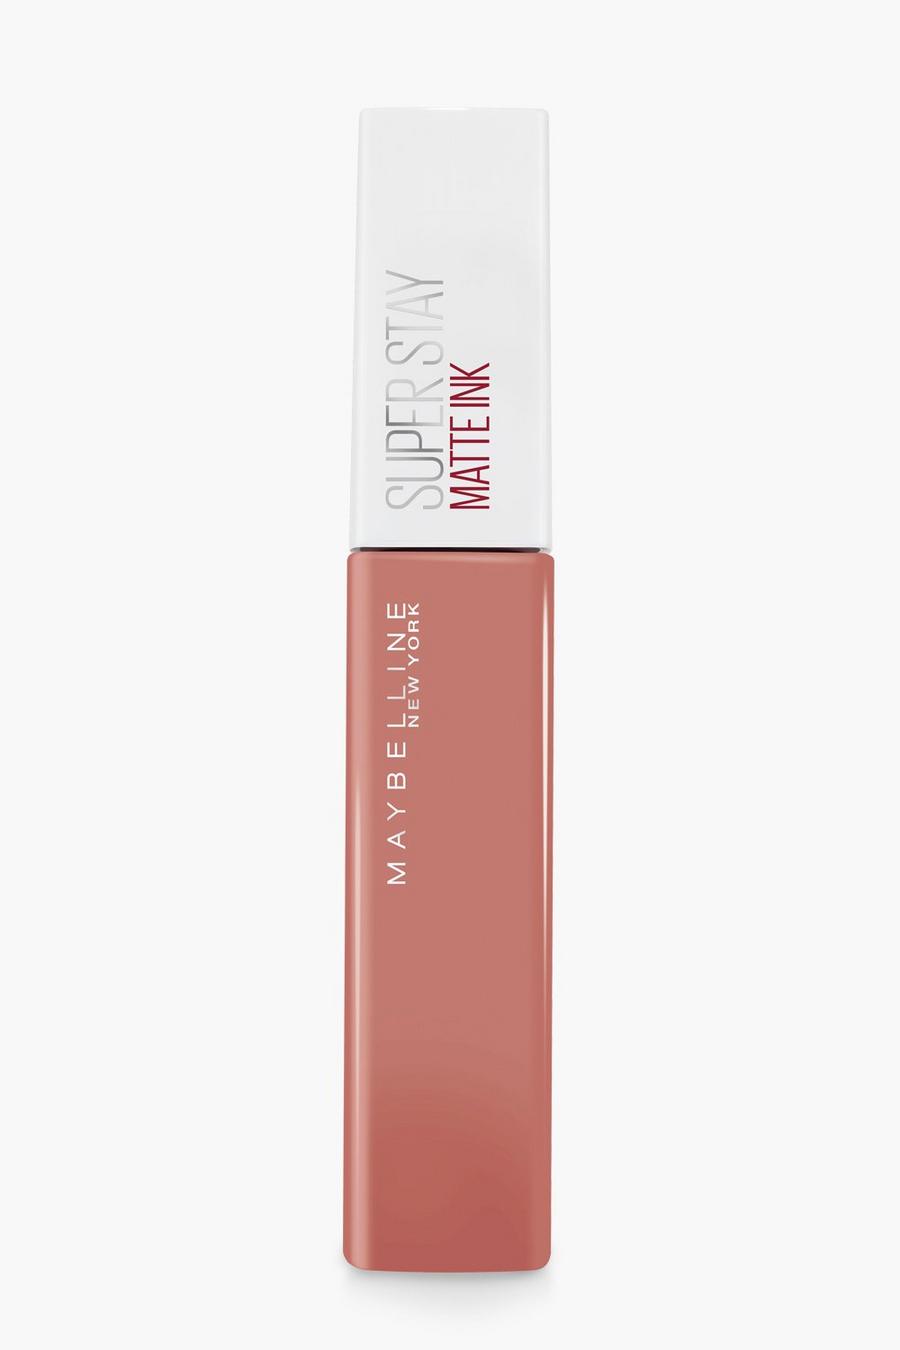 Maybelline Superstay Matte Ink Nude Liquid Lipstick 65 Seductress